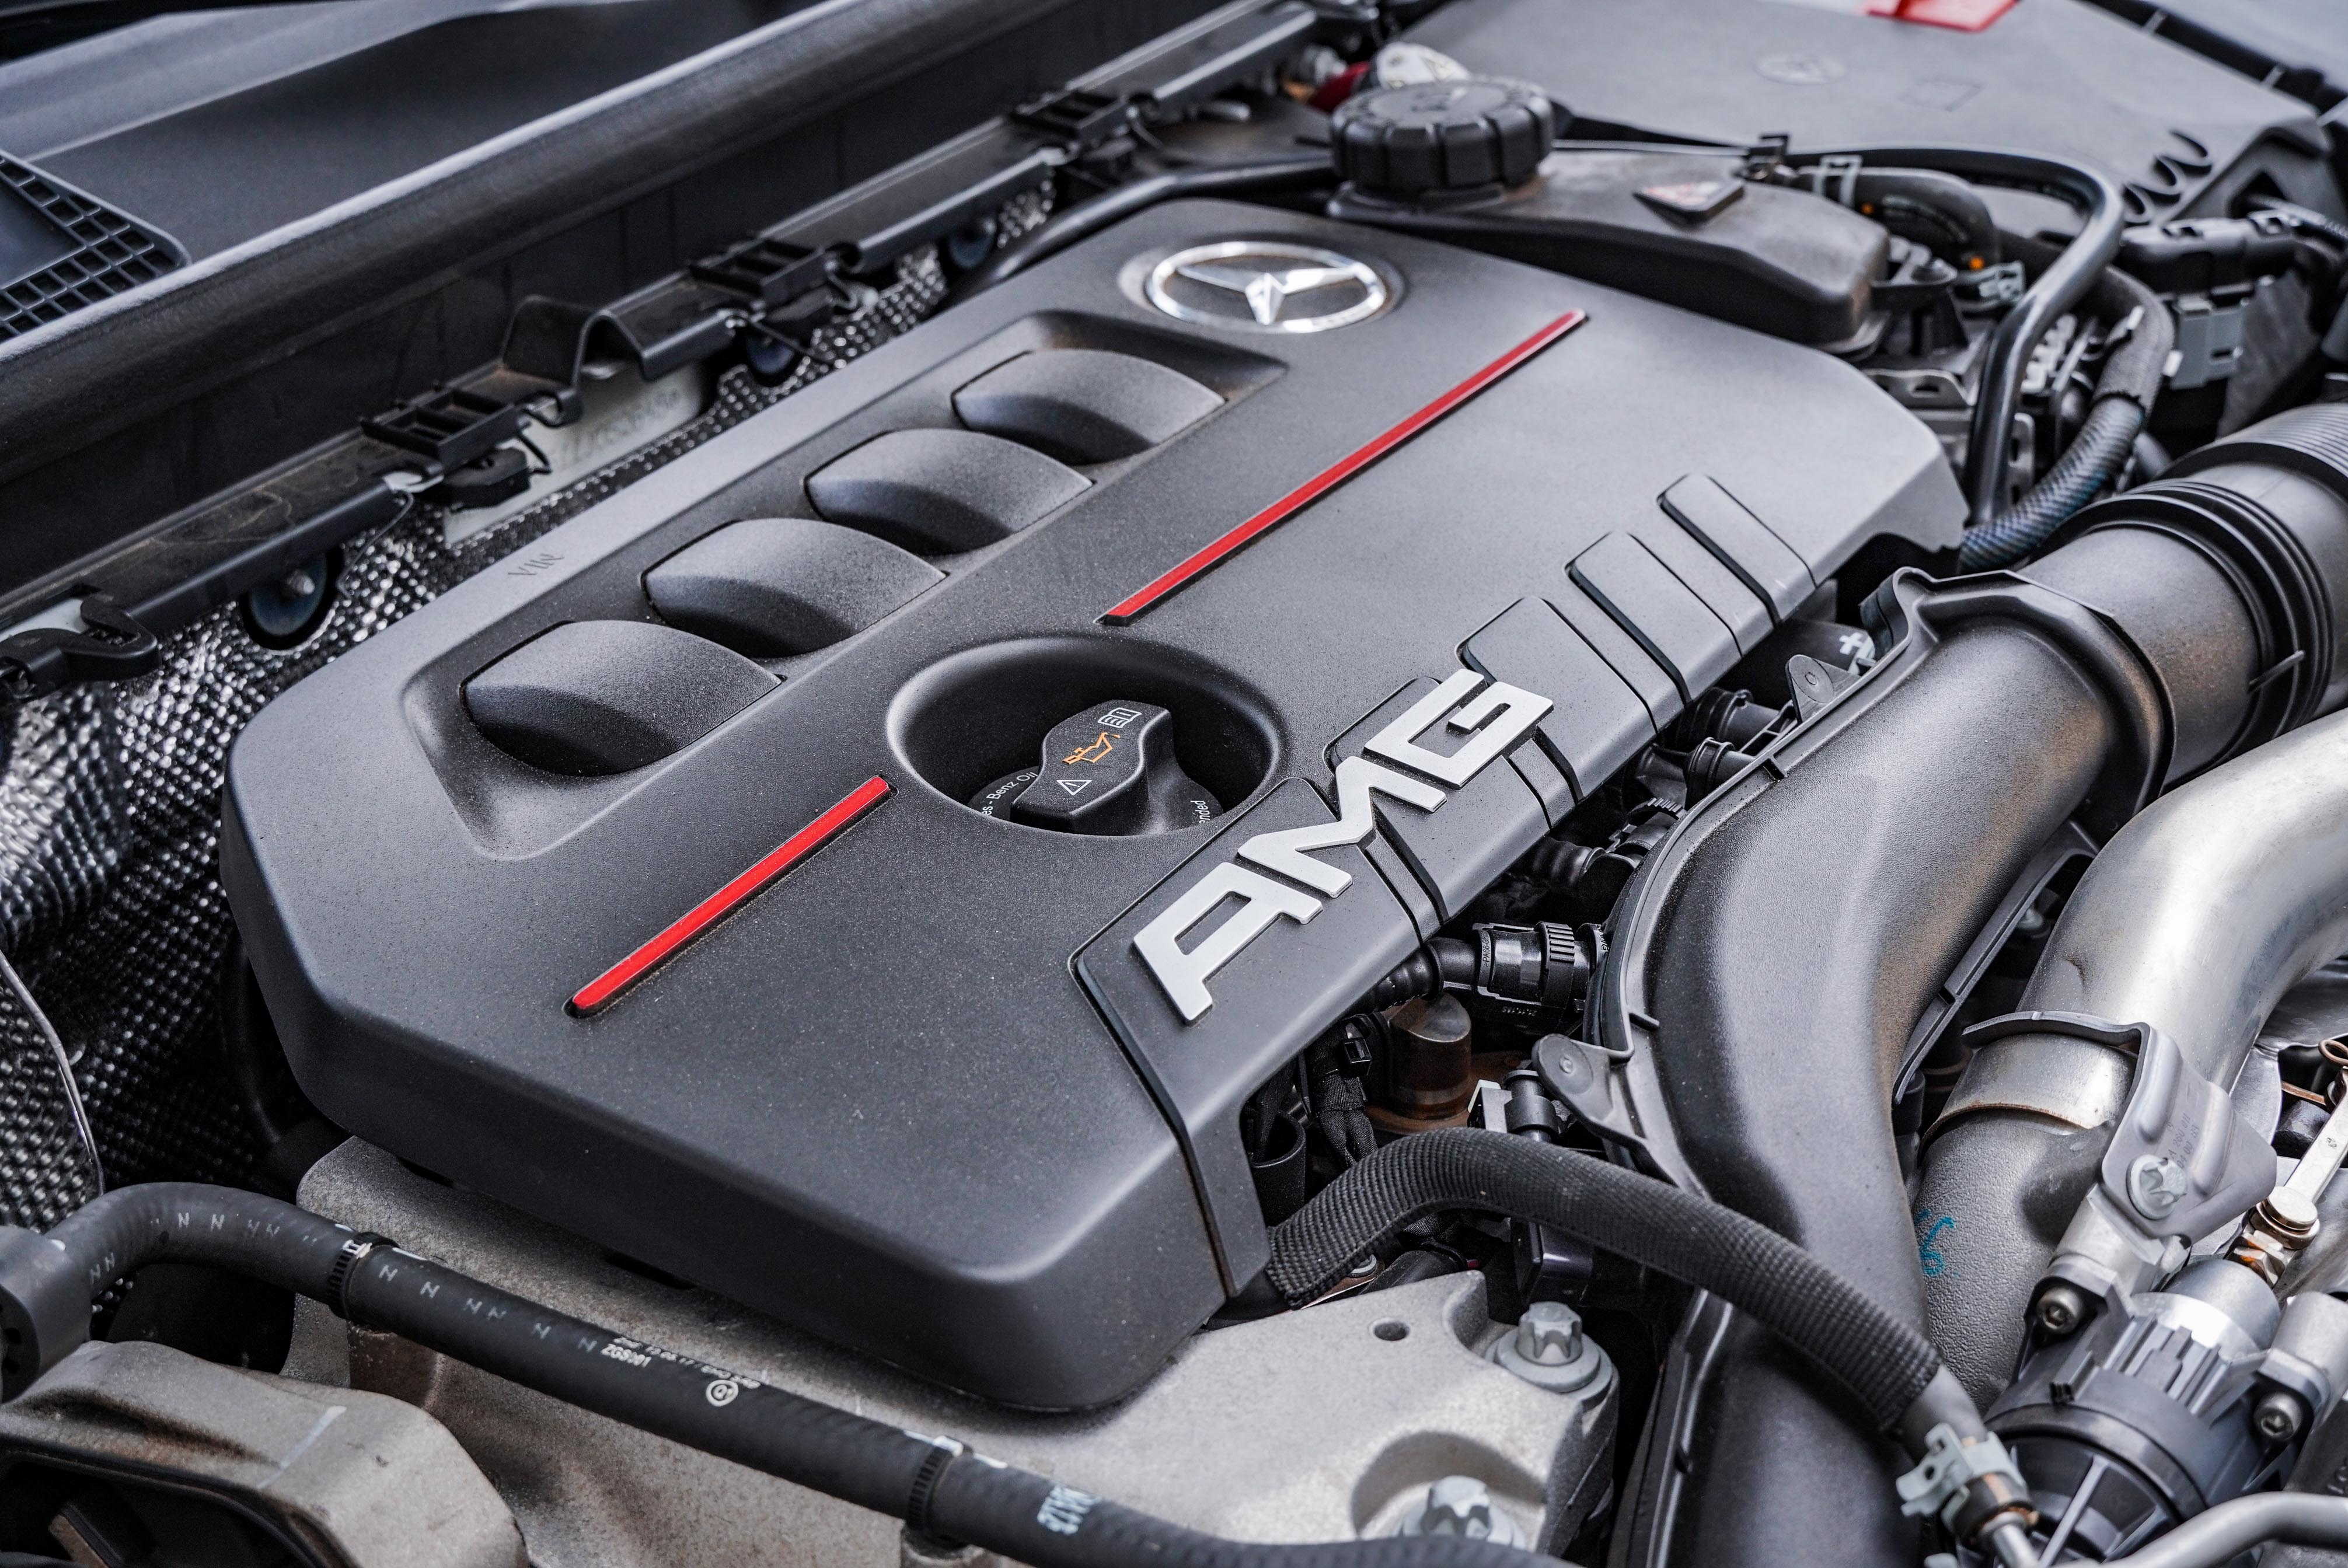 AMG 35 車系共通的四缸渦輪引擎擁有 306 hp@5,800rpm、400 Nm@3000-4000rpm 的動力輸出。